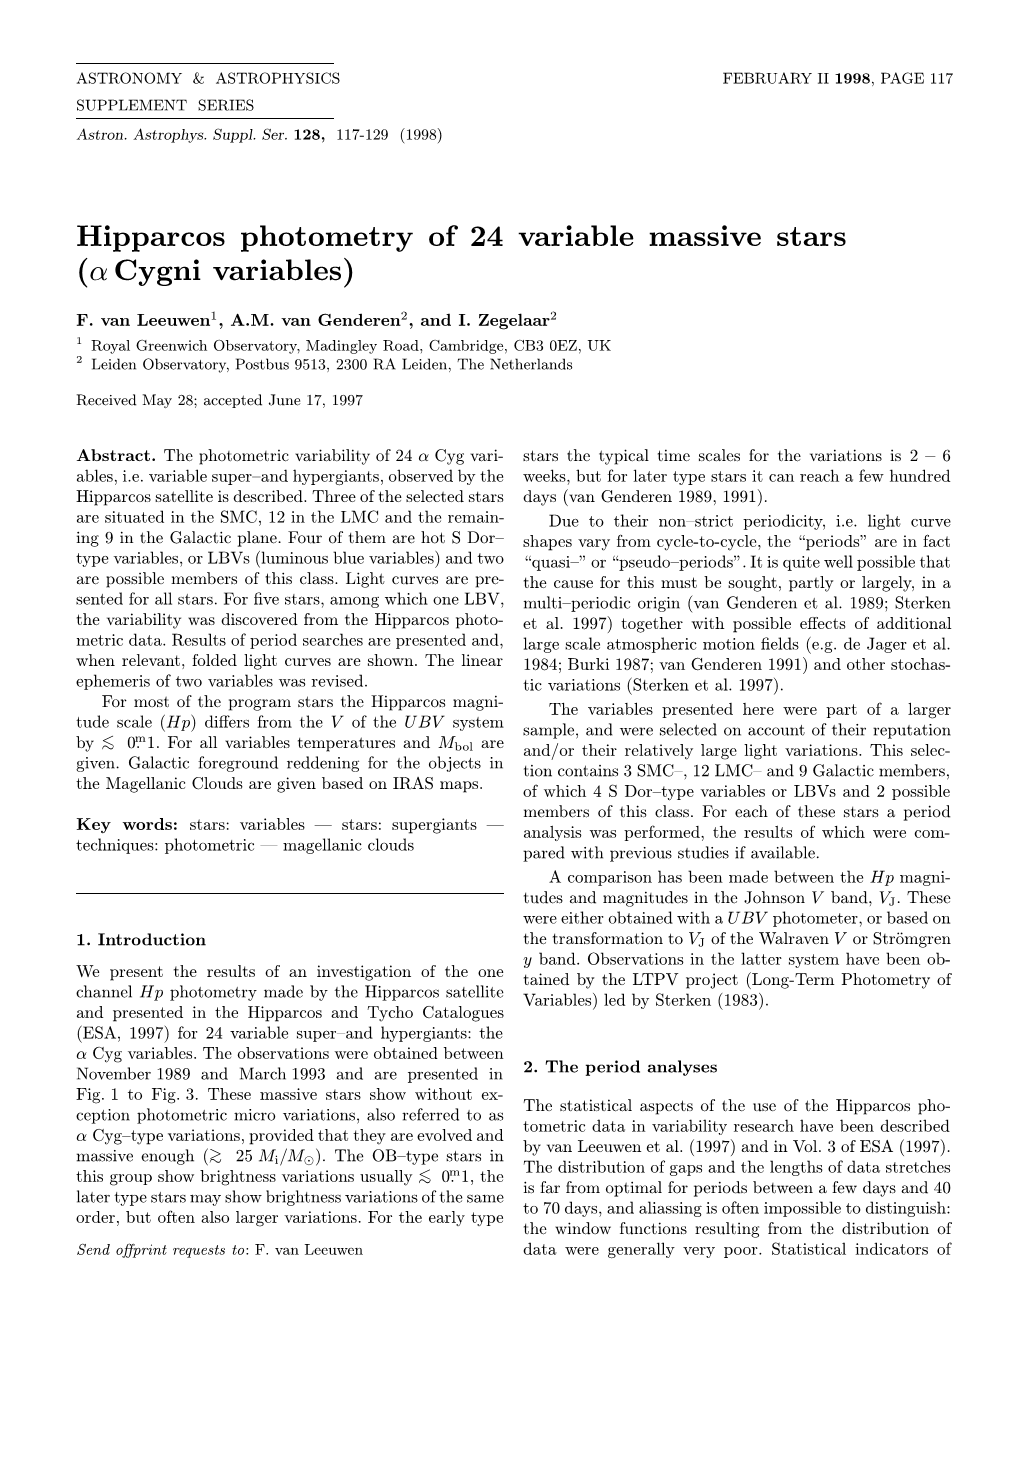 Hipparcos Photometry of 24 Variable Massive Stars (Α Cygni Variables)